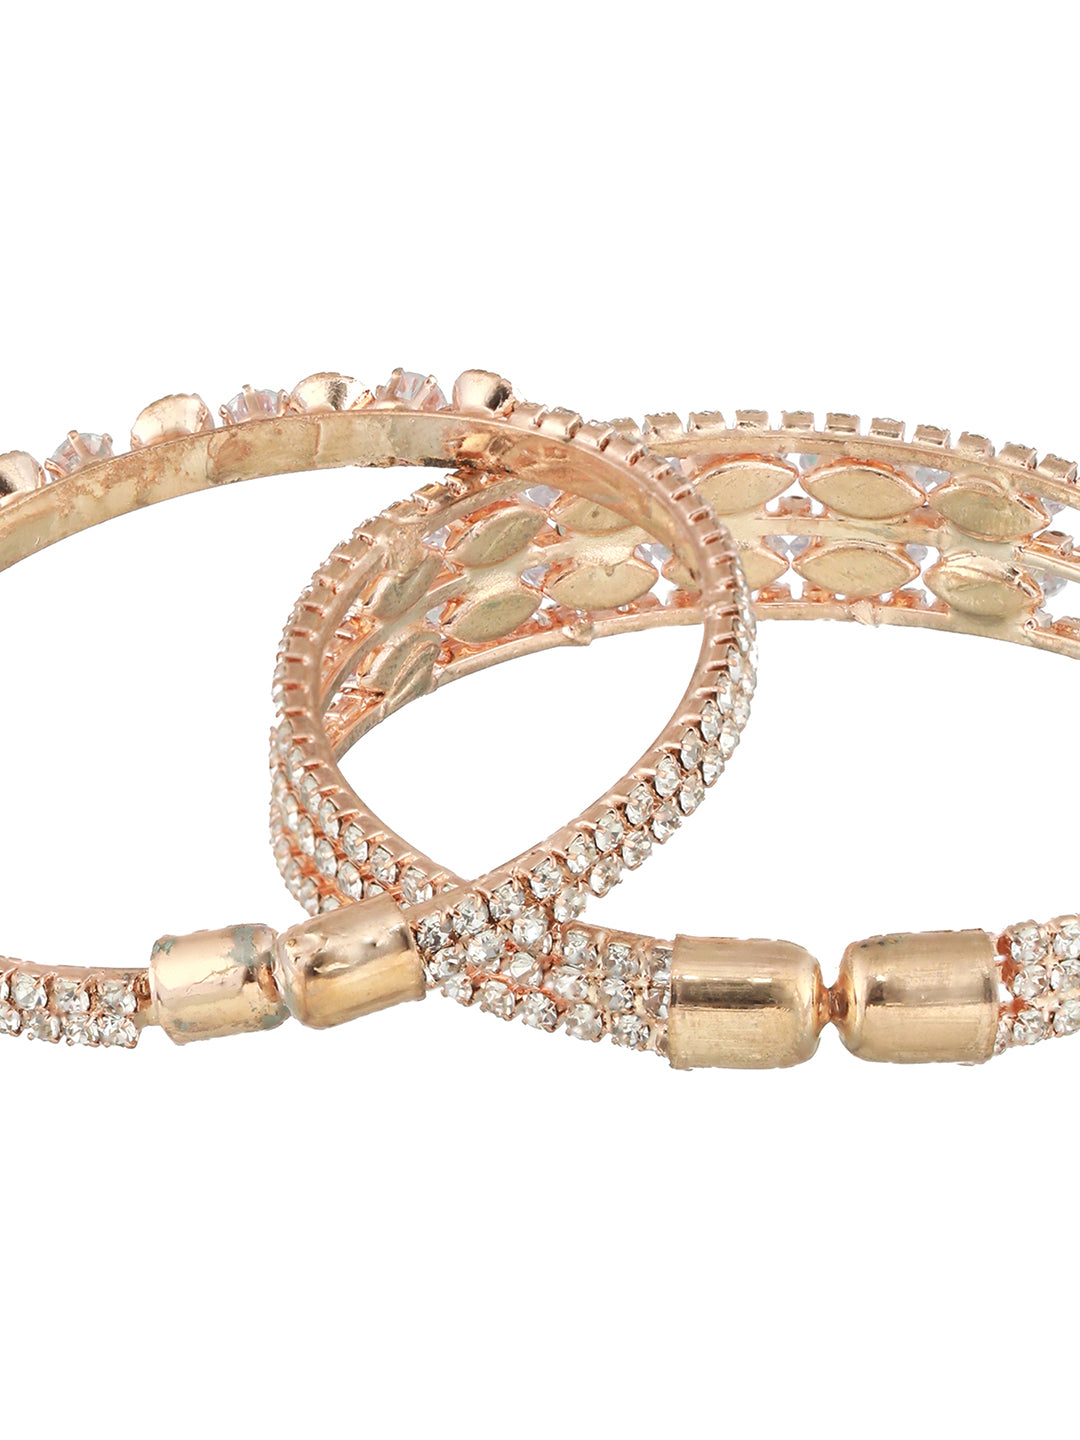 Jazz And Sizzle Set Of 2 Rose Gold-Plated White Crystal Studded Cuff Bracelet - Jazzandsizzle